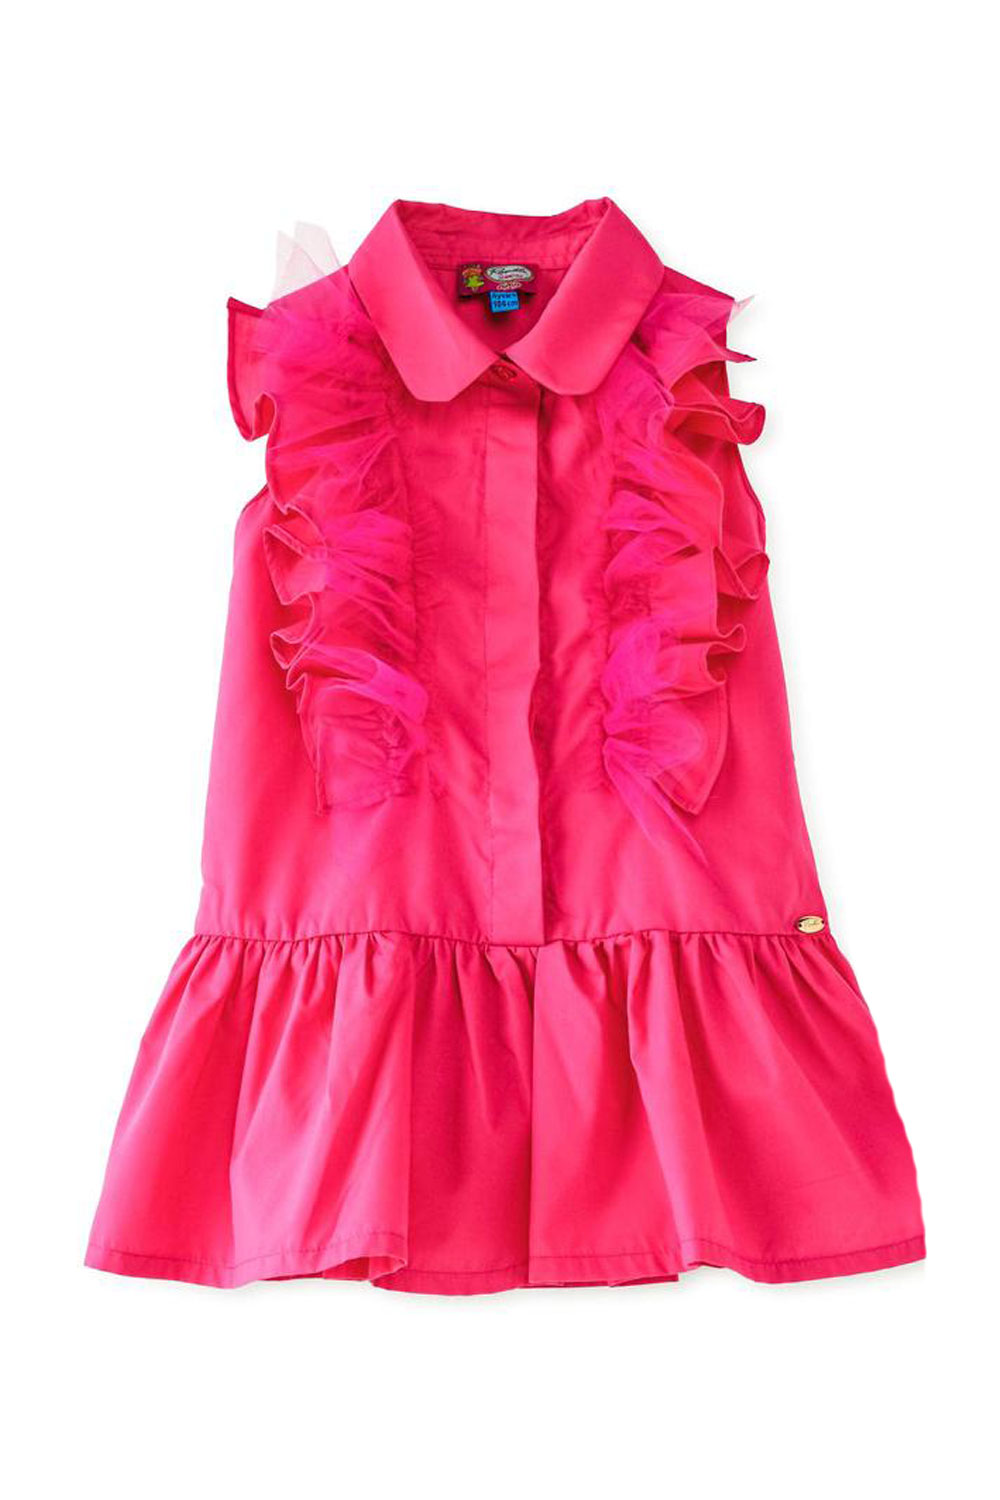 ROSALITA SENORITAS Pink Ruffle Shirt Dress - Poppydoll